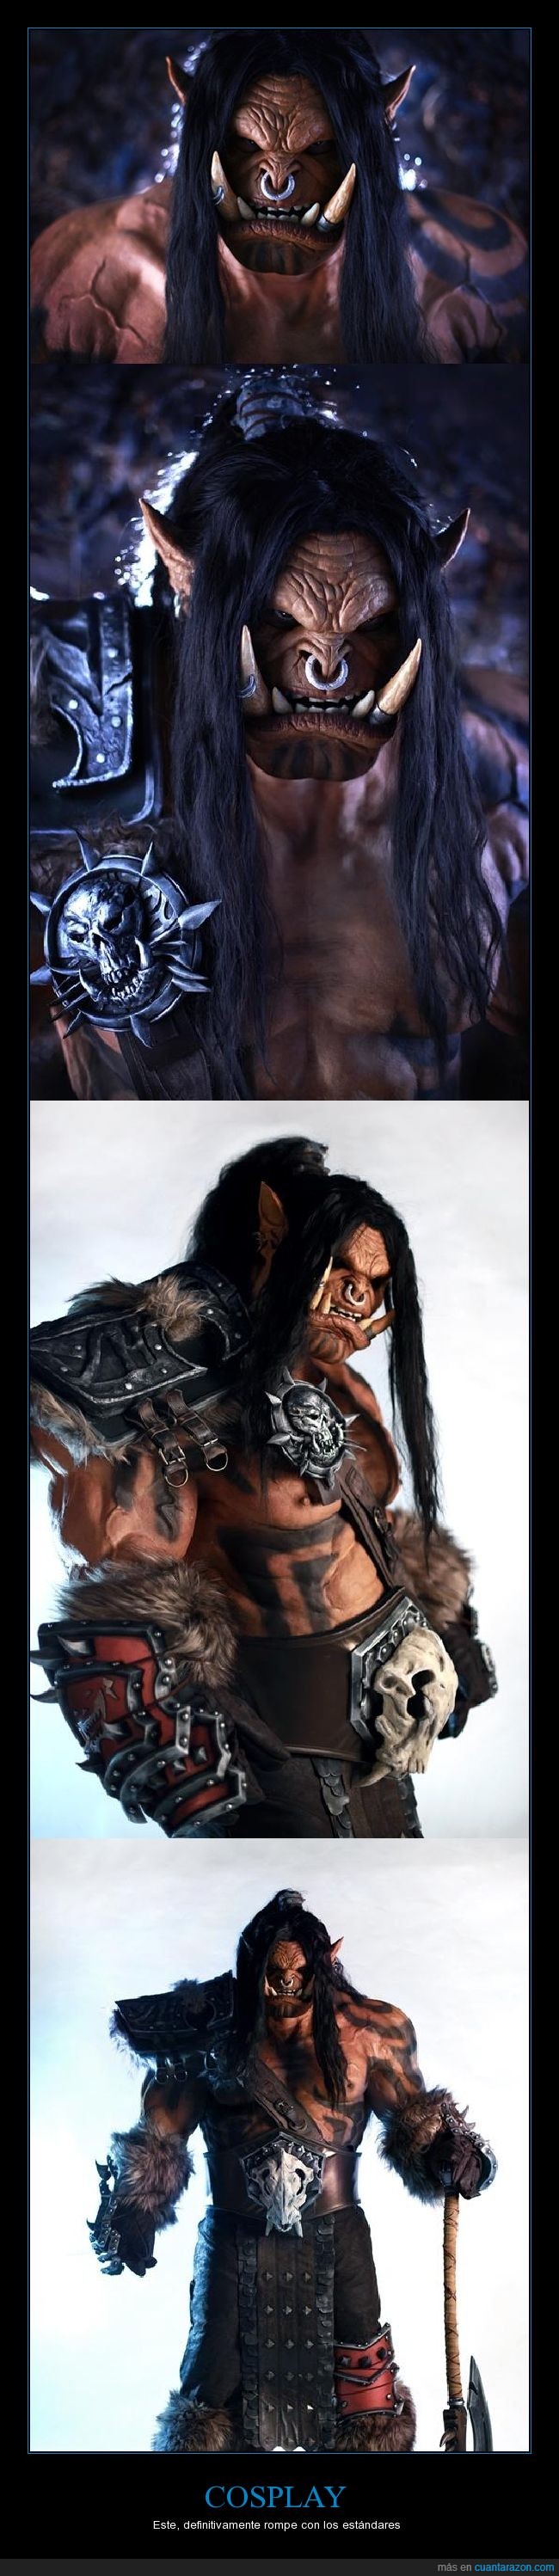 Grommash,World of Warcraft,cosplay,increible,coreanos,alucinante,disfraz,wow